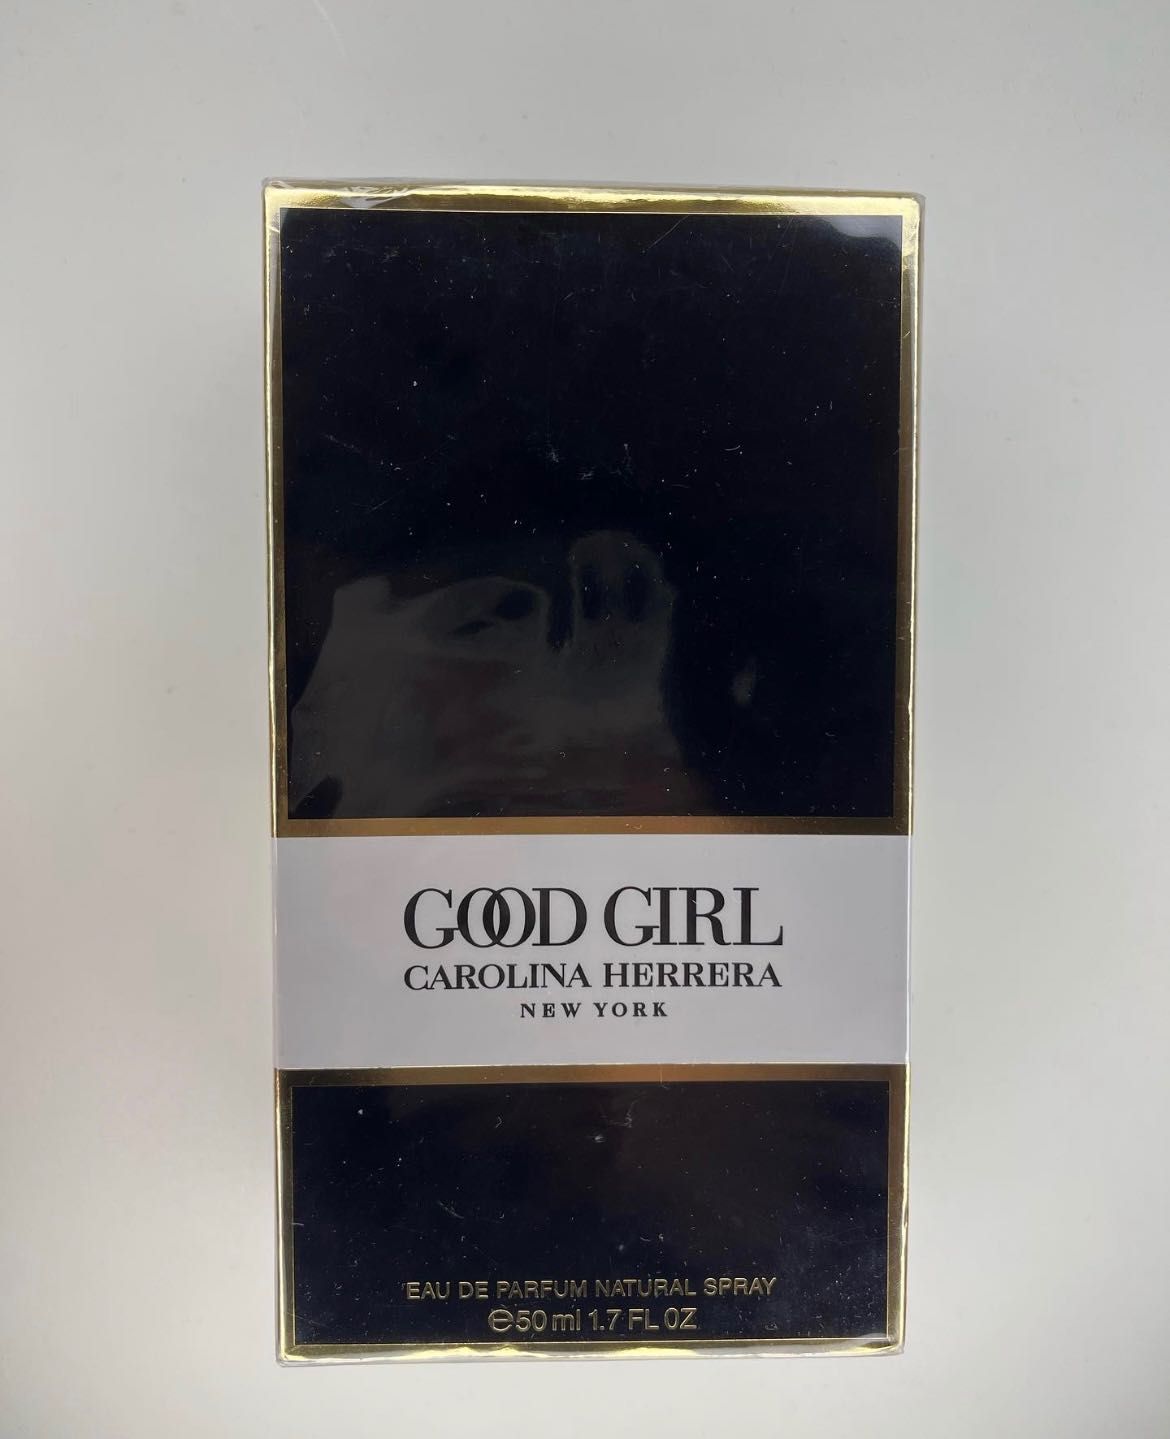 Parfum “Good Girl” Carolina Herrera